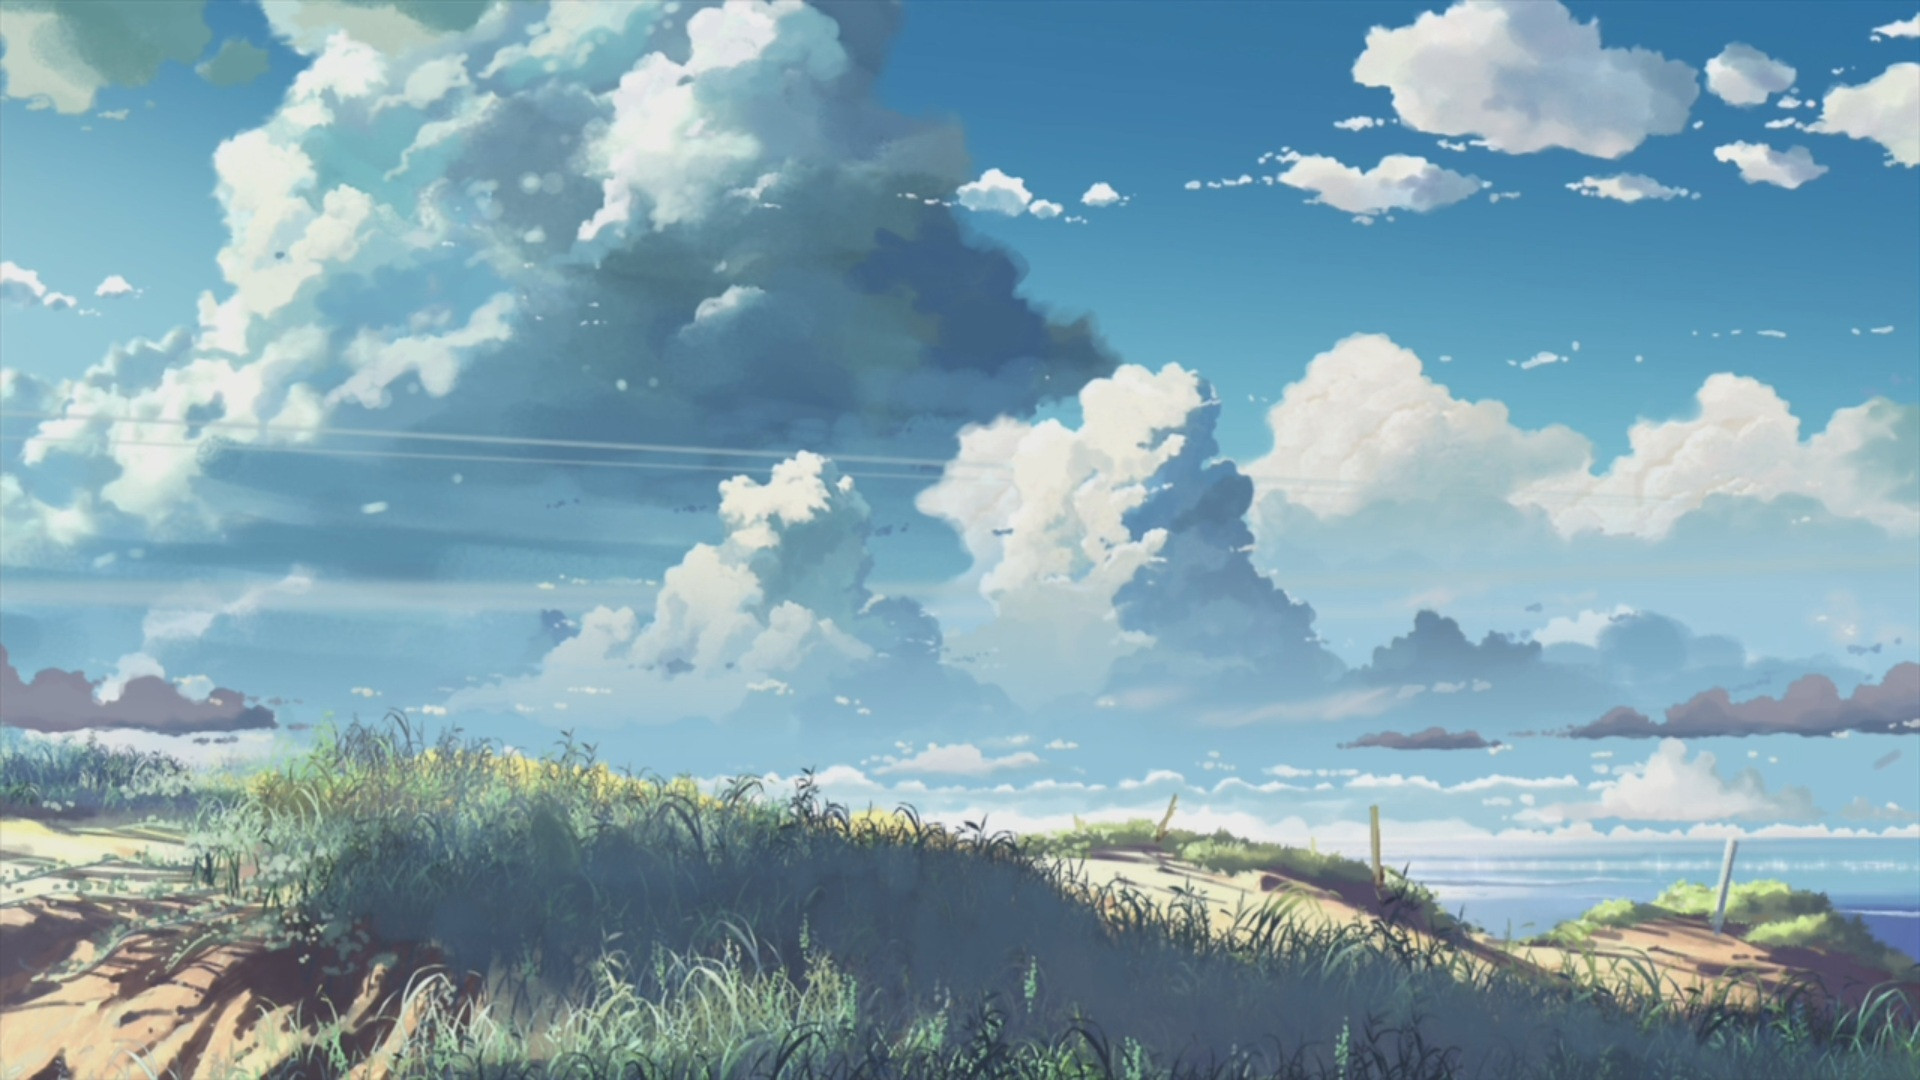 Best ideas about Anime Landscape Wallpaper
. Save or Pin Anime Landscape Wallpaper HD Now.